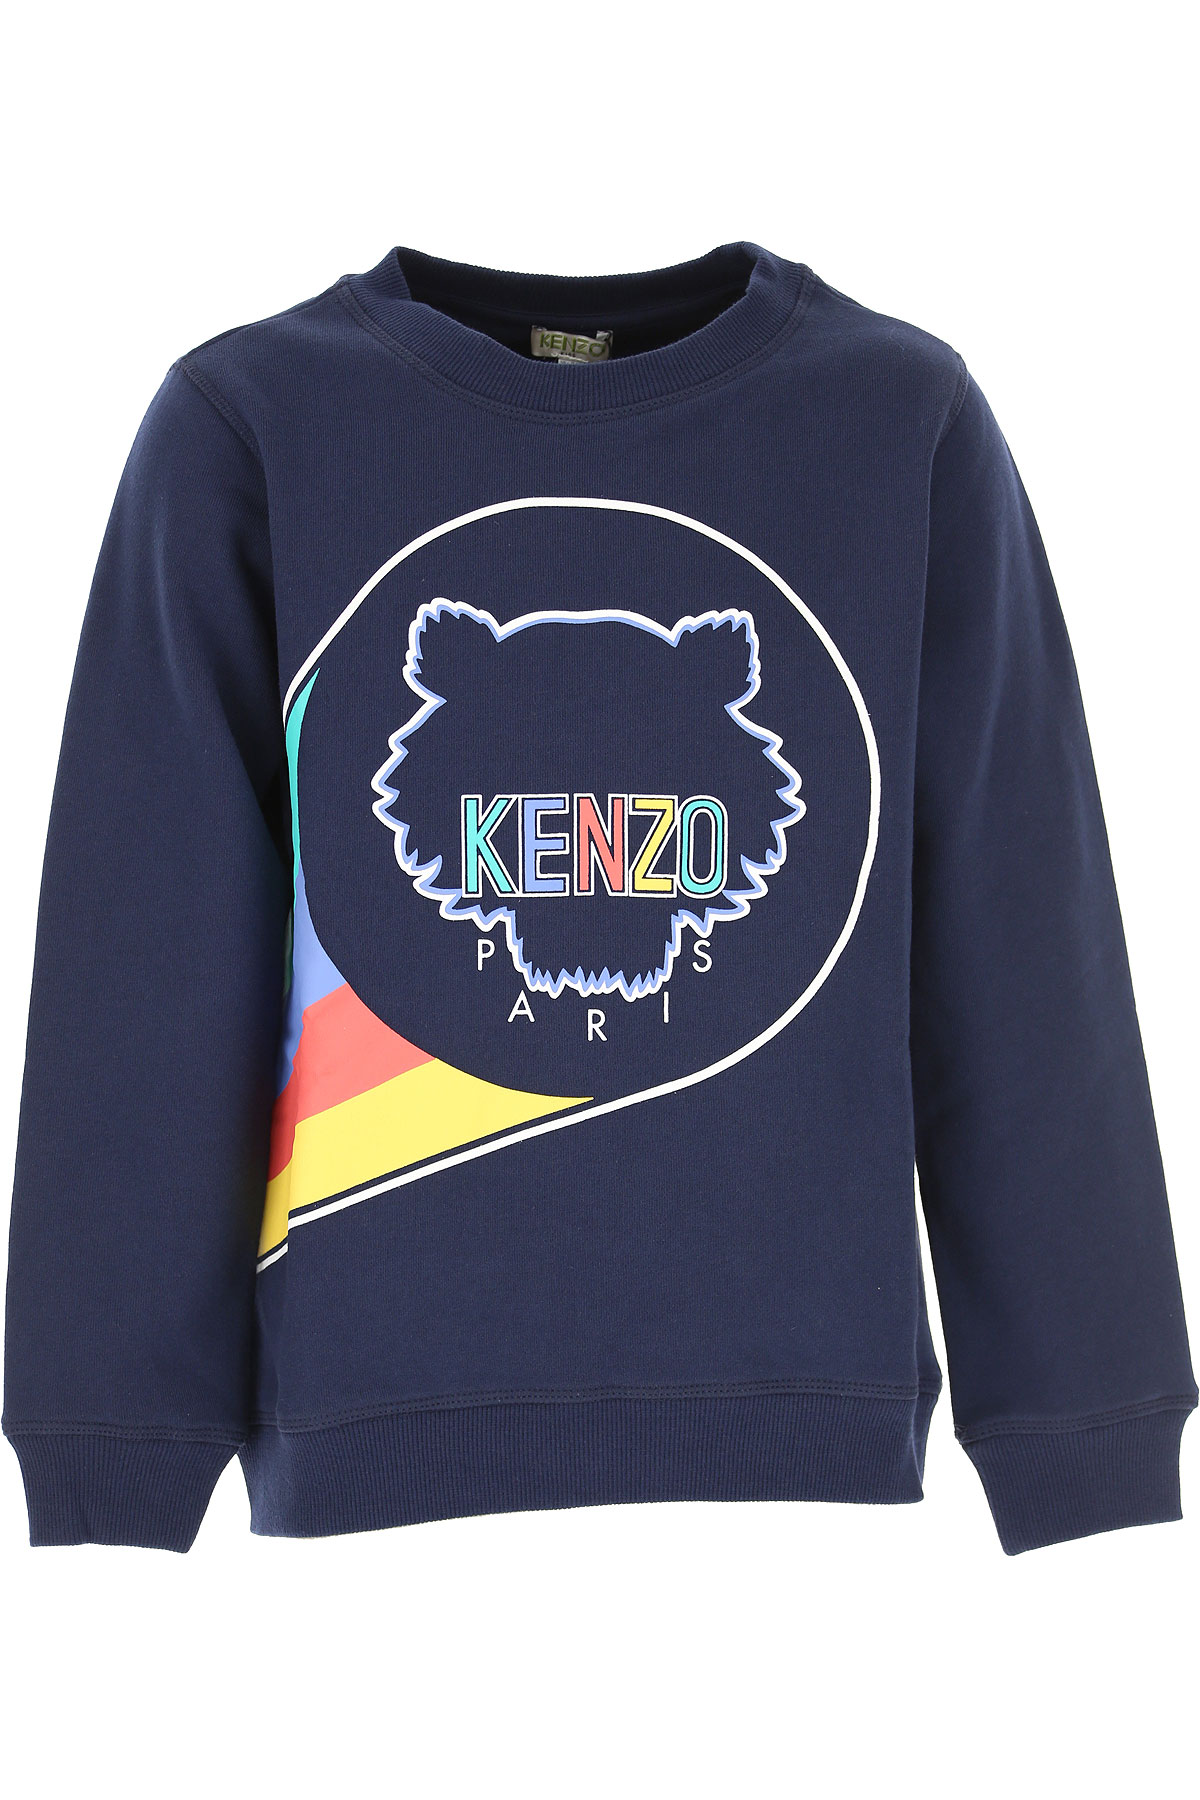 Kenzo Kinder Sweatshirt & Kapuzenpullover für Jungen Günstig im Sale, Blau, Baumwolle, 2017, 10Y 12Y 14Y 2Y 3Y 4Y 5Y 6Y 8Y